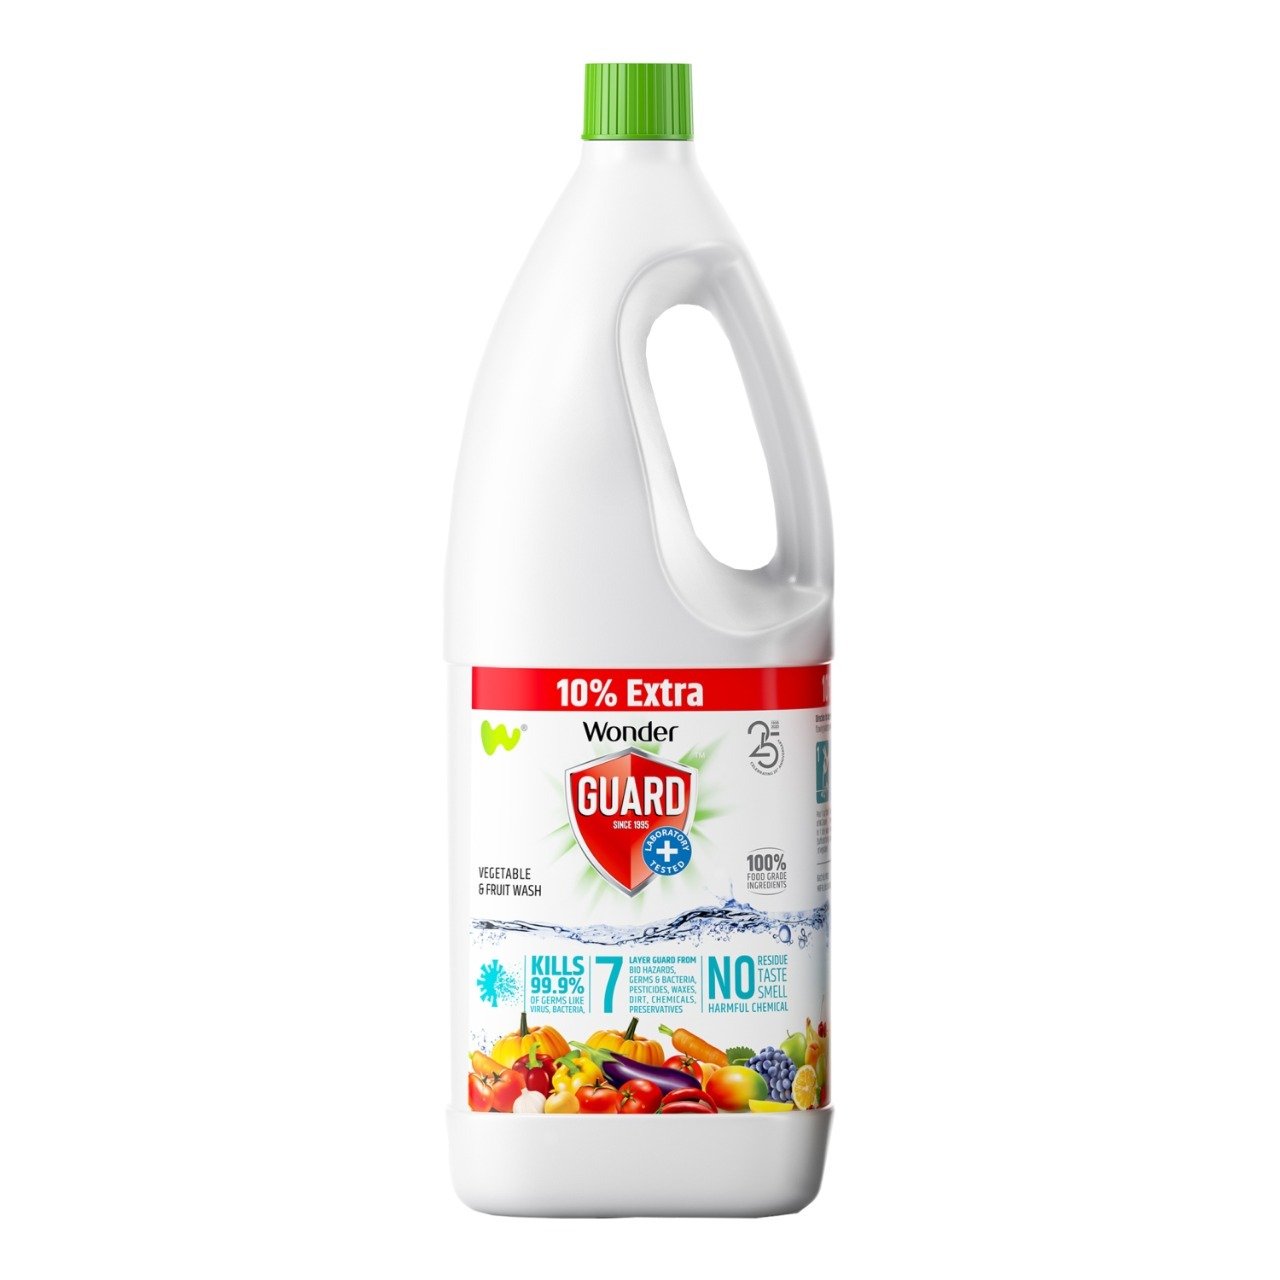 1332 natural vegetable fruit wash liquid 525 ml